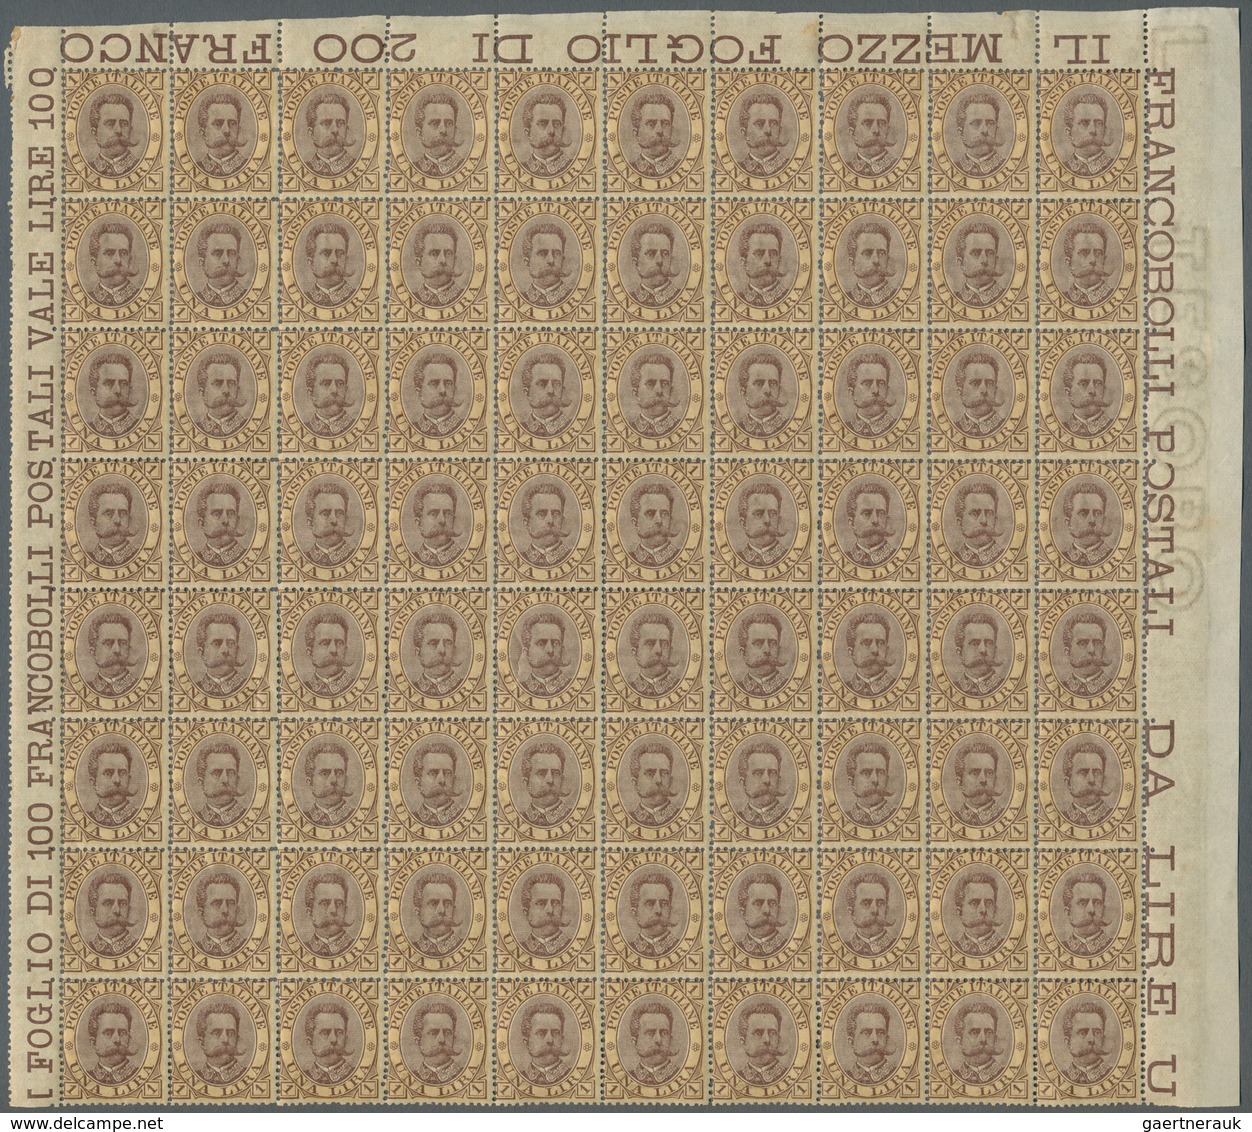 Italien: 1889, Umberto I, 1 L. Brown Yellow Part Sheet Of 80, Mint Never Hinged, Little Uneven And G - Ongebruikt